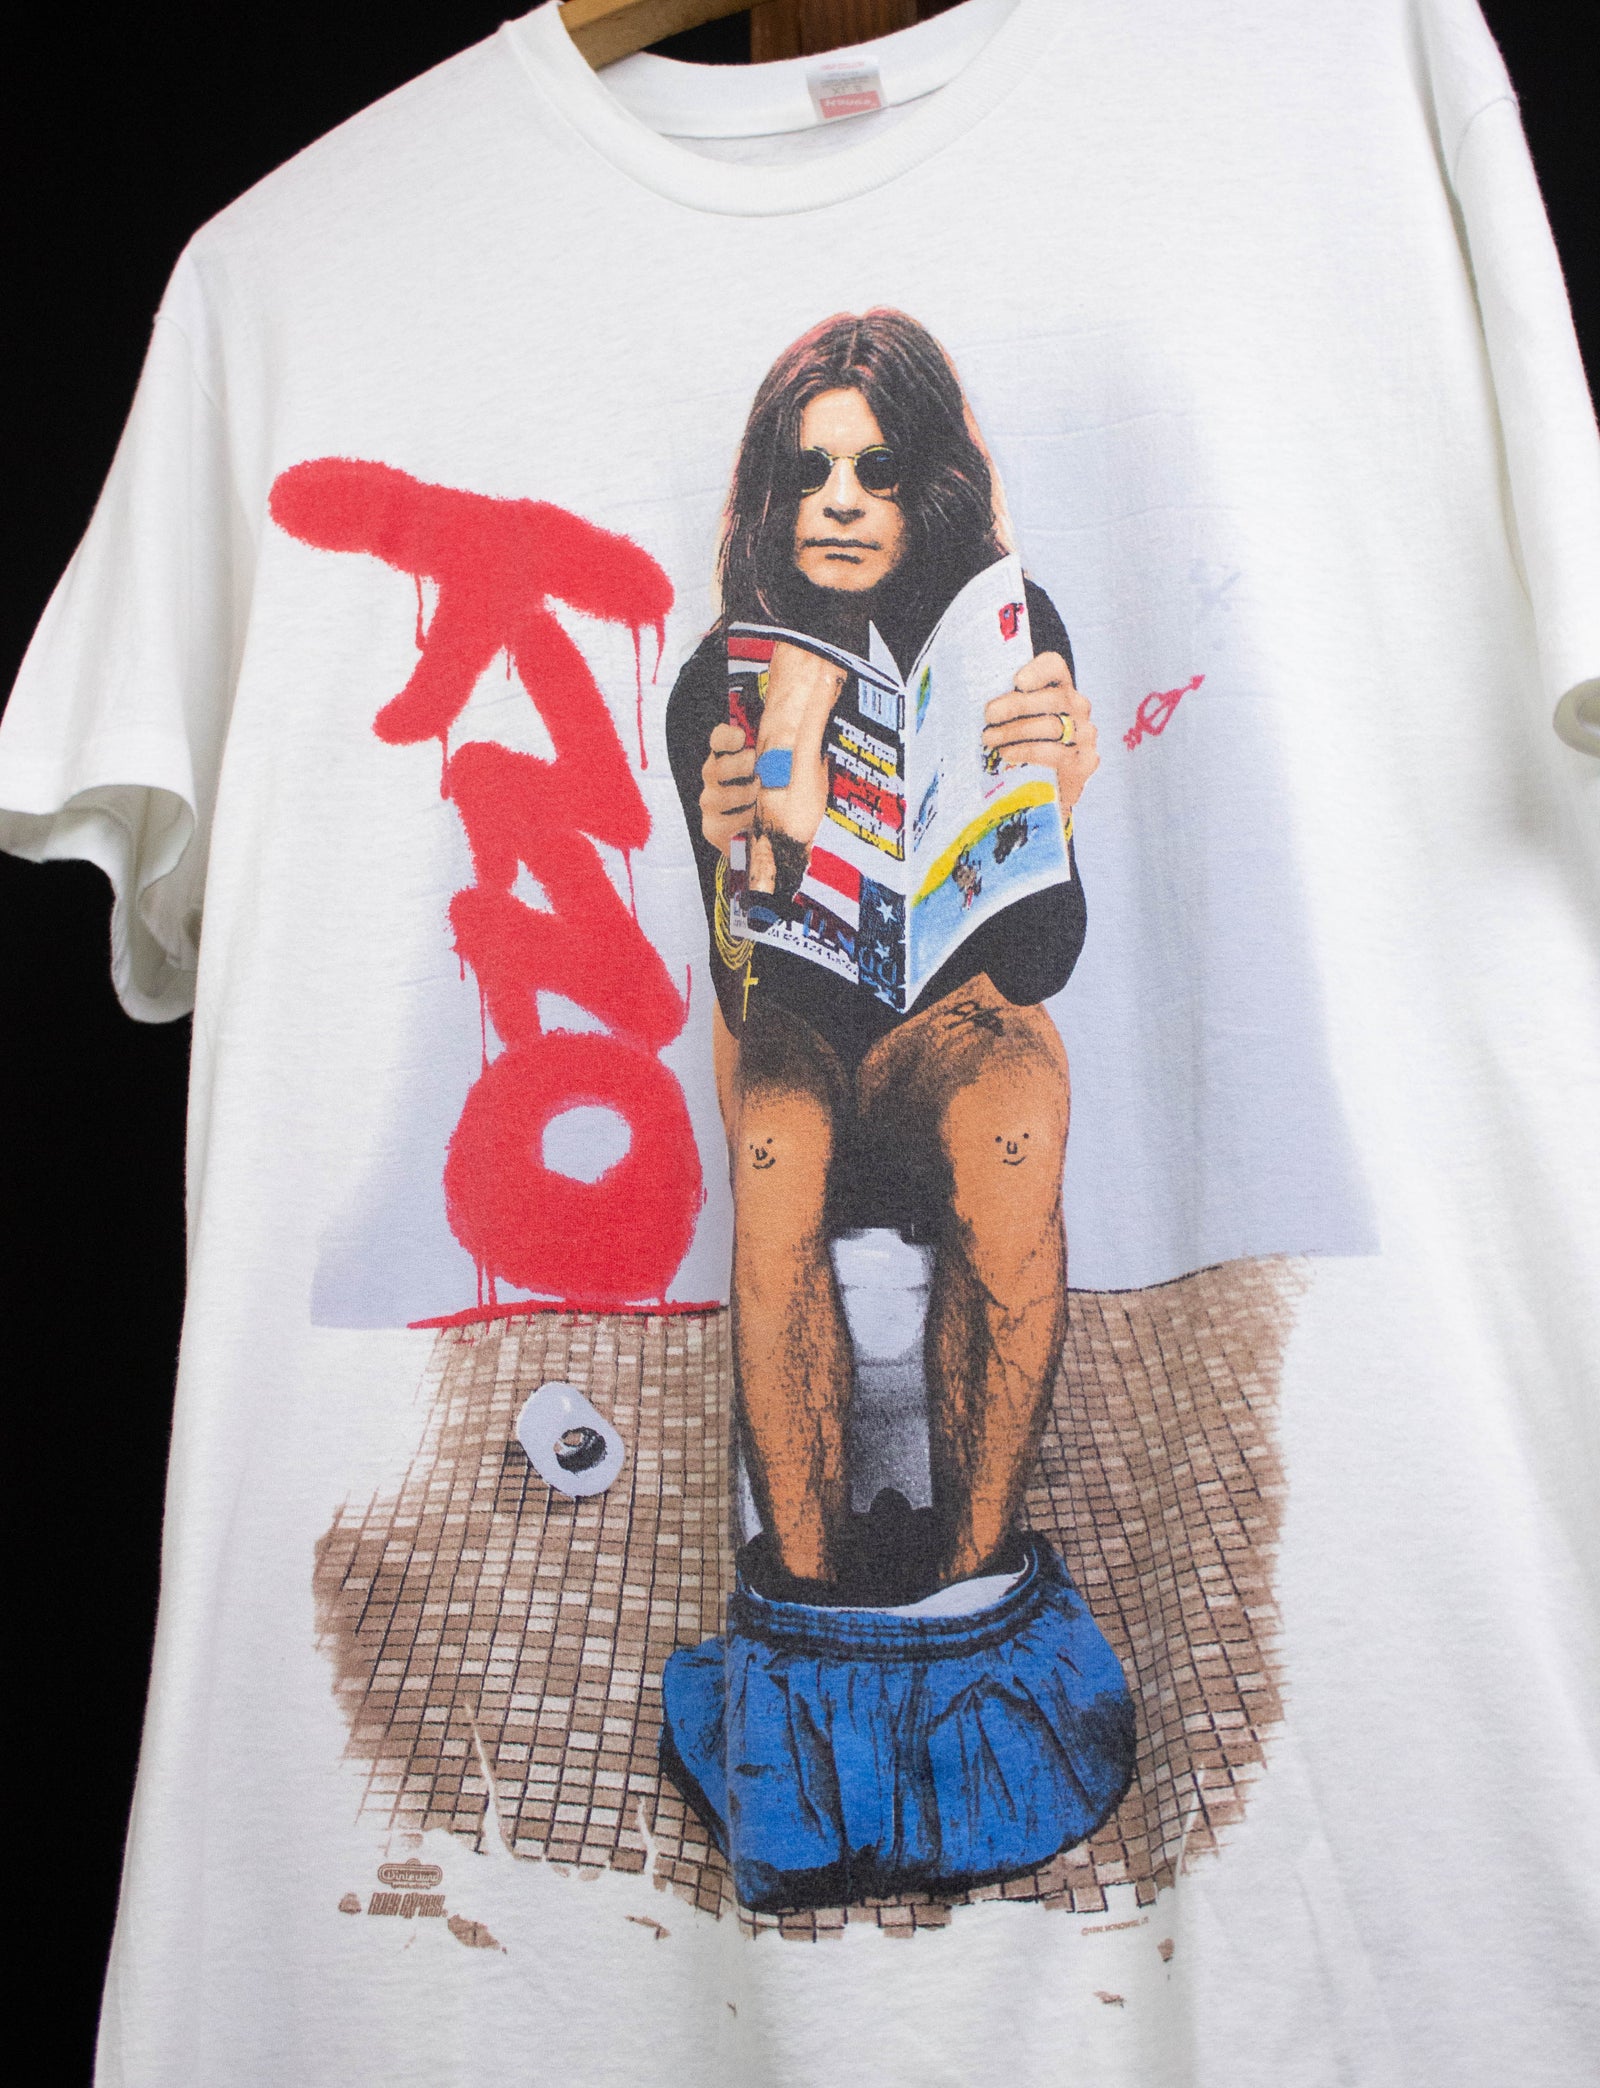 Vintage Ozzy Osbourne 1992 No More Tours Toilet Concert T Shirt ...